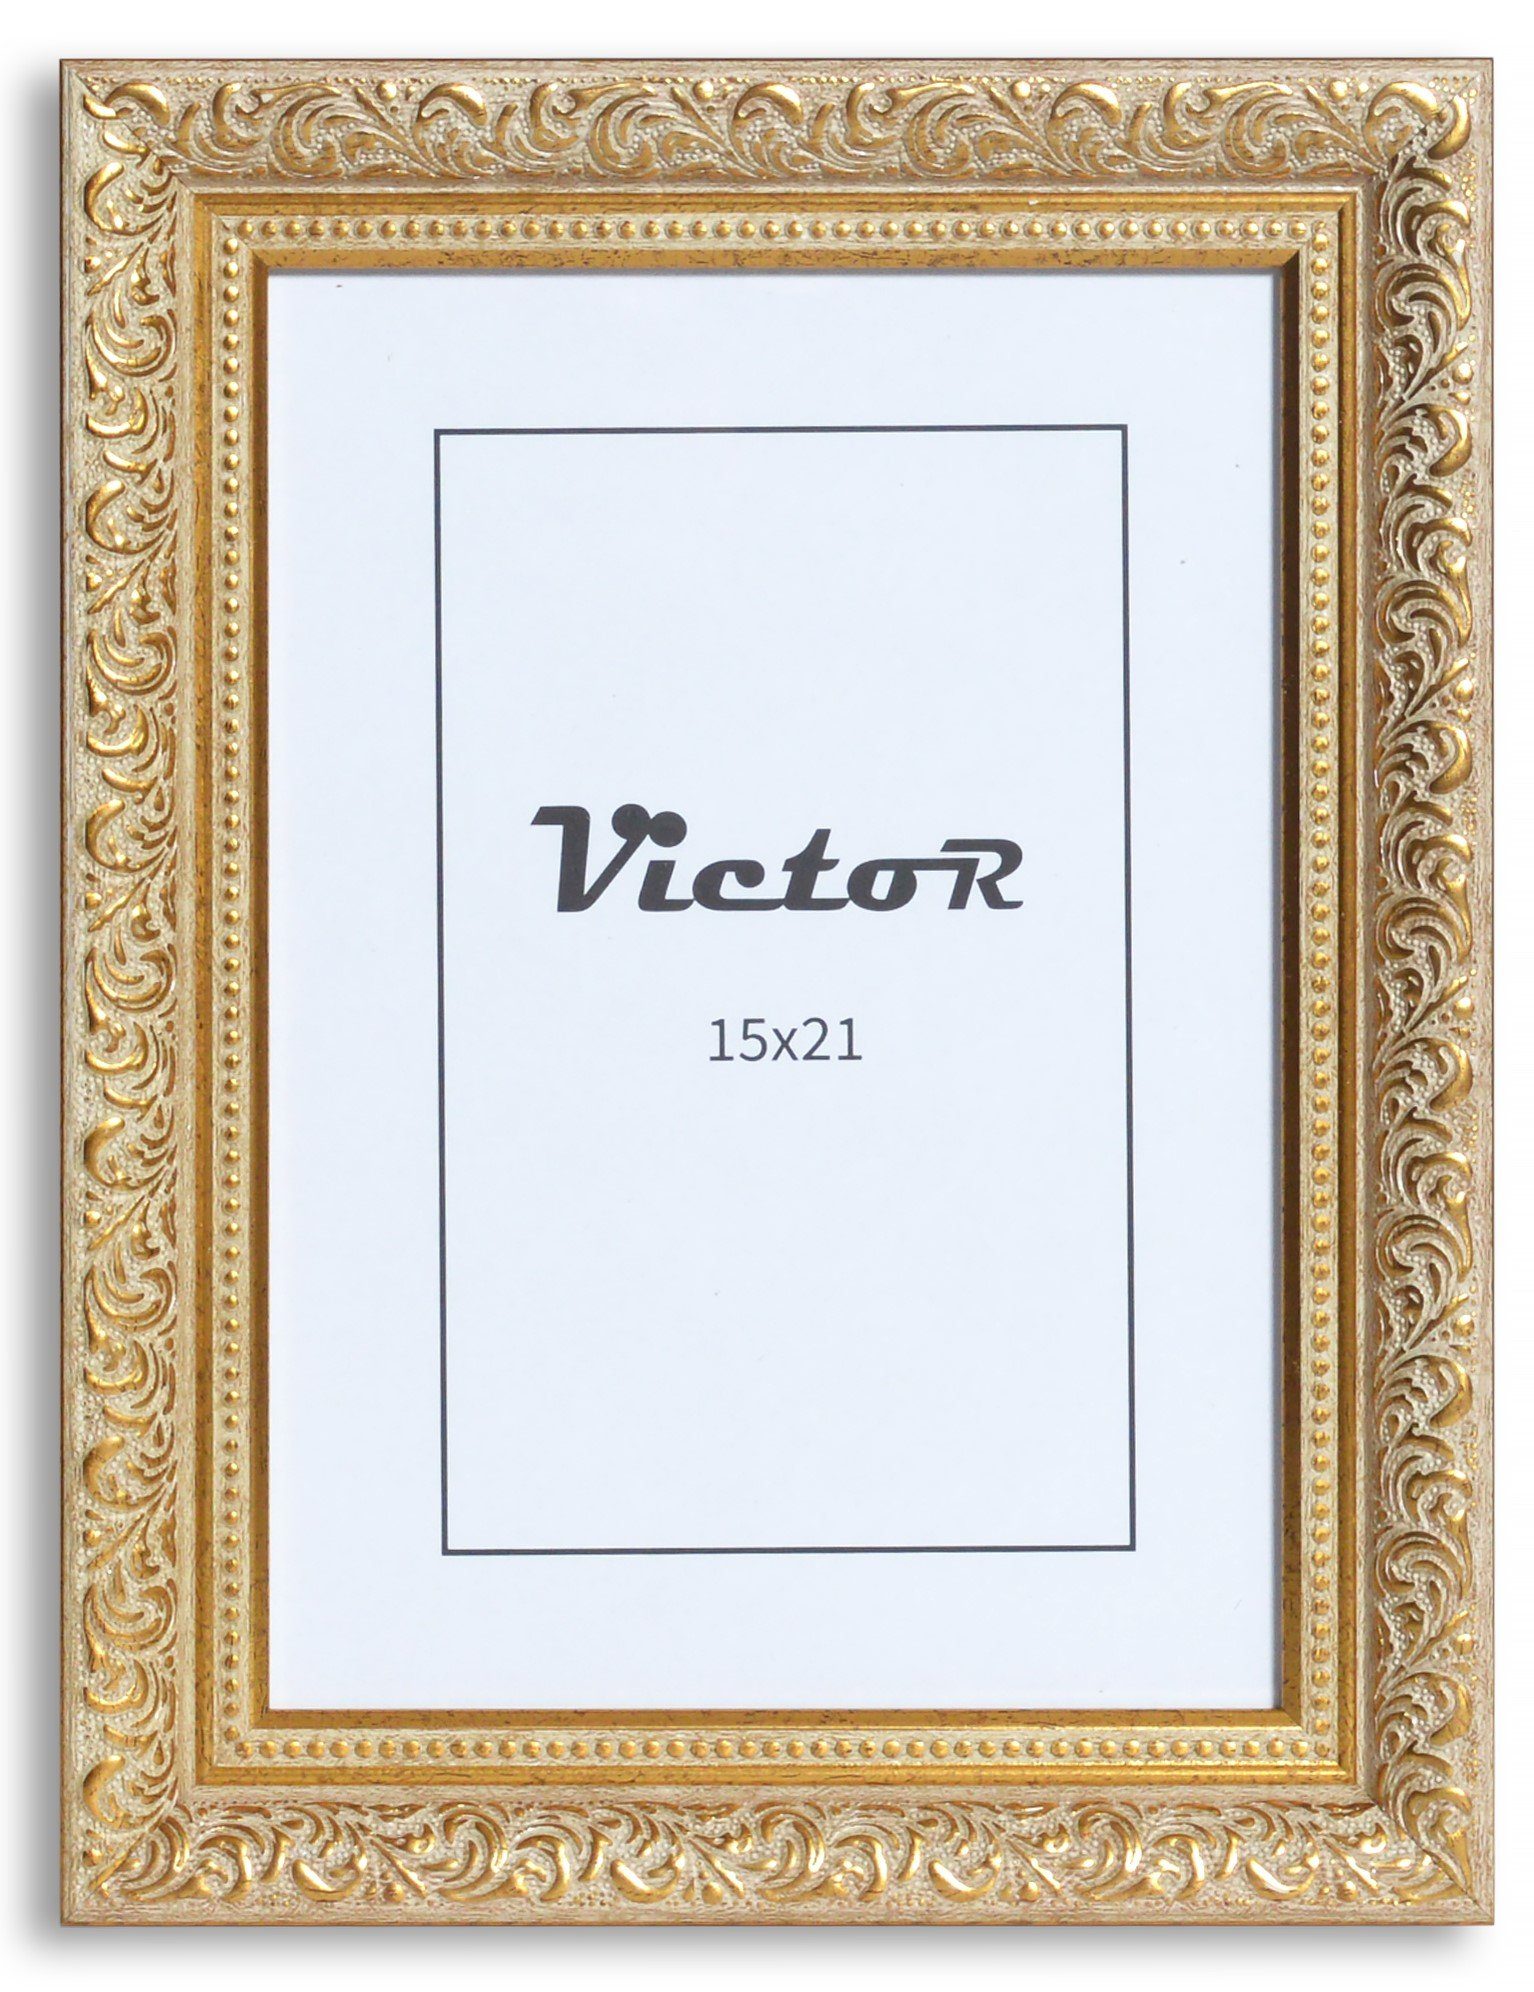 Victor (Zenith) Bilderrahmen Bilderrahmen \"Rubens\" - Farbe: Grün Gold - Größe: 15 x 21 cm, Bilderrahmen 15x21 cm Grün Gold A5, Bilderrahmen Barock, Antik